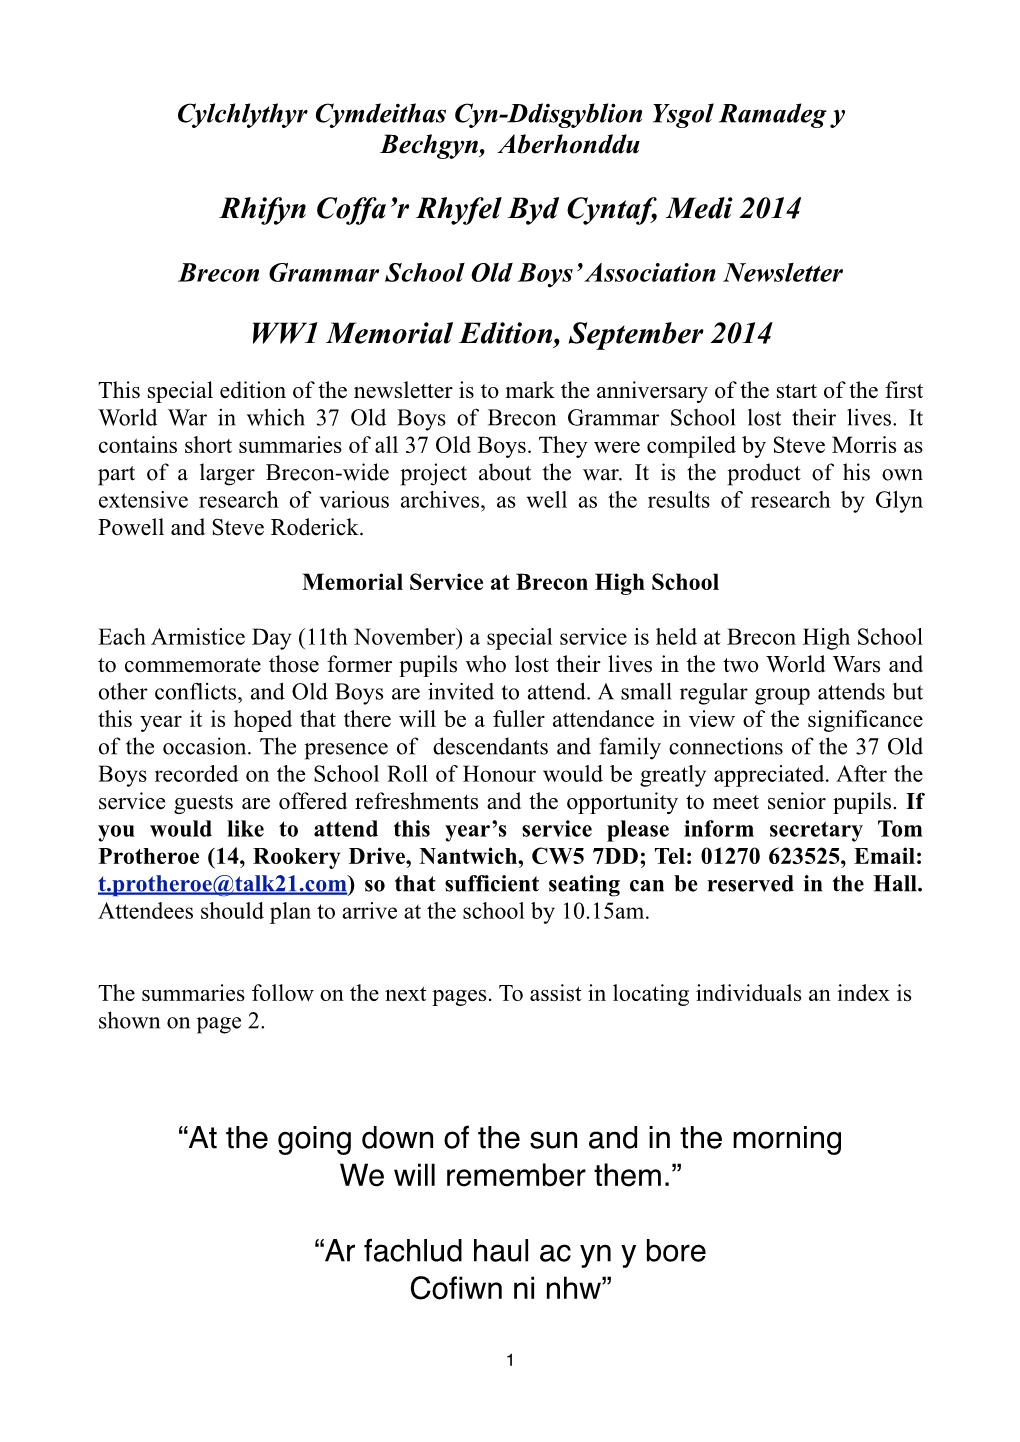 Brecon Grammar School Old Boys’ Association Newsletter